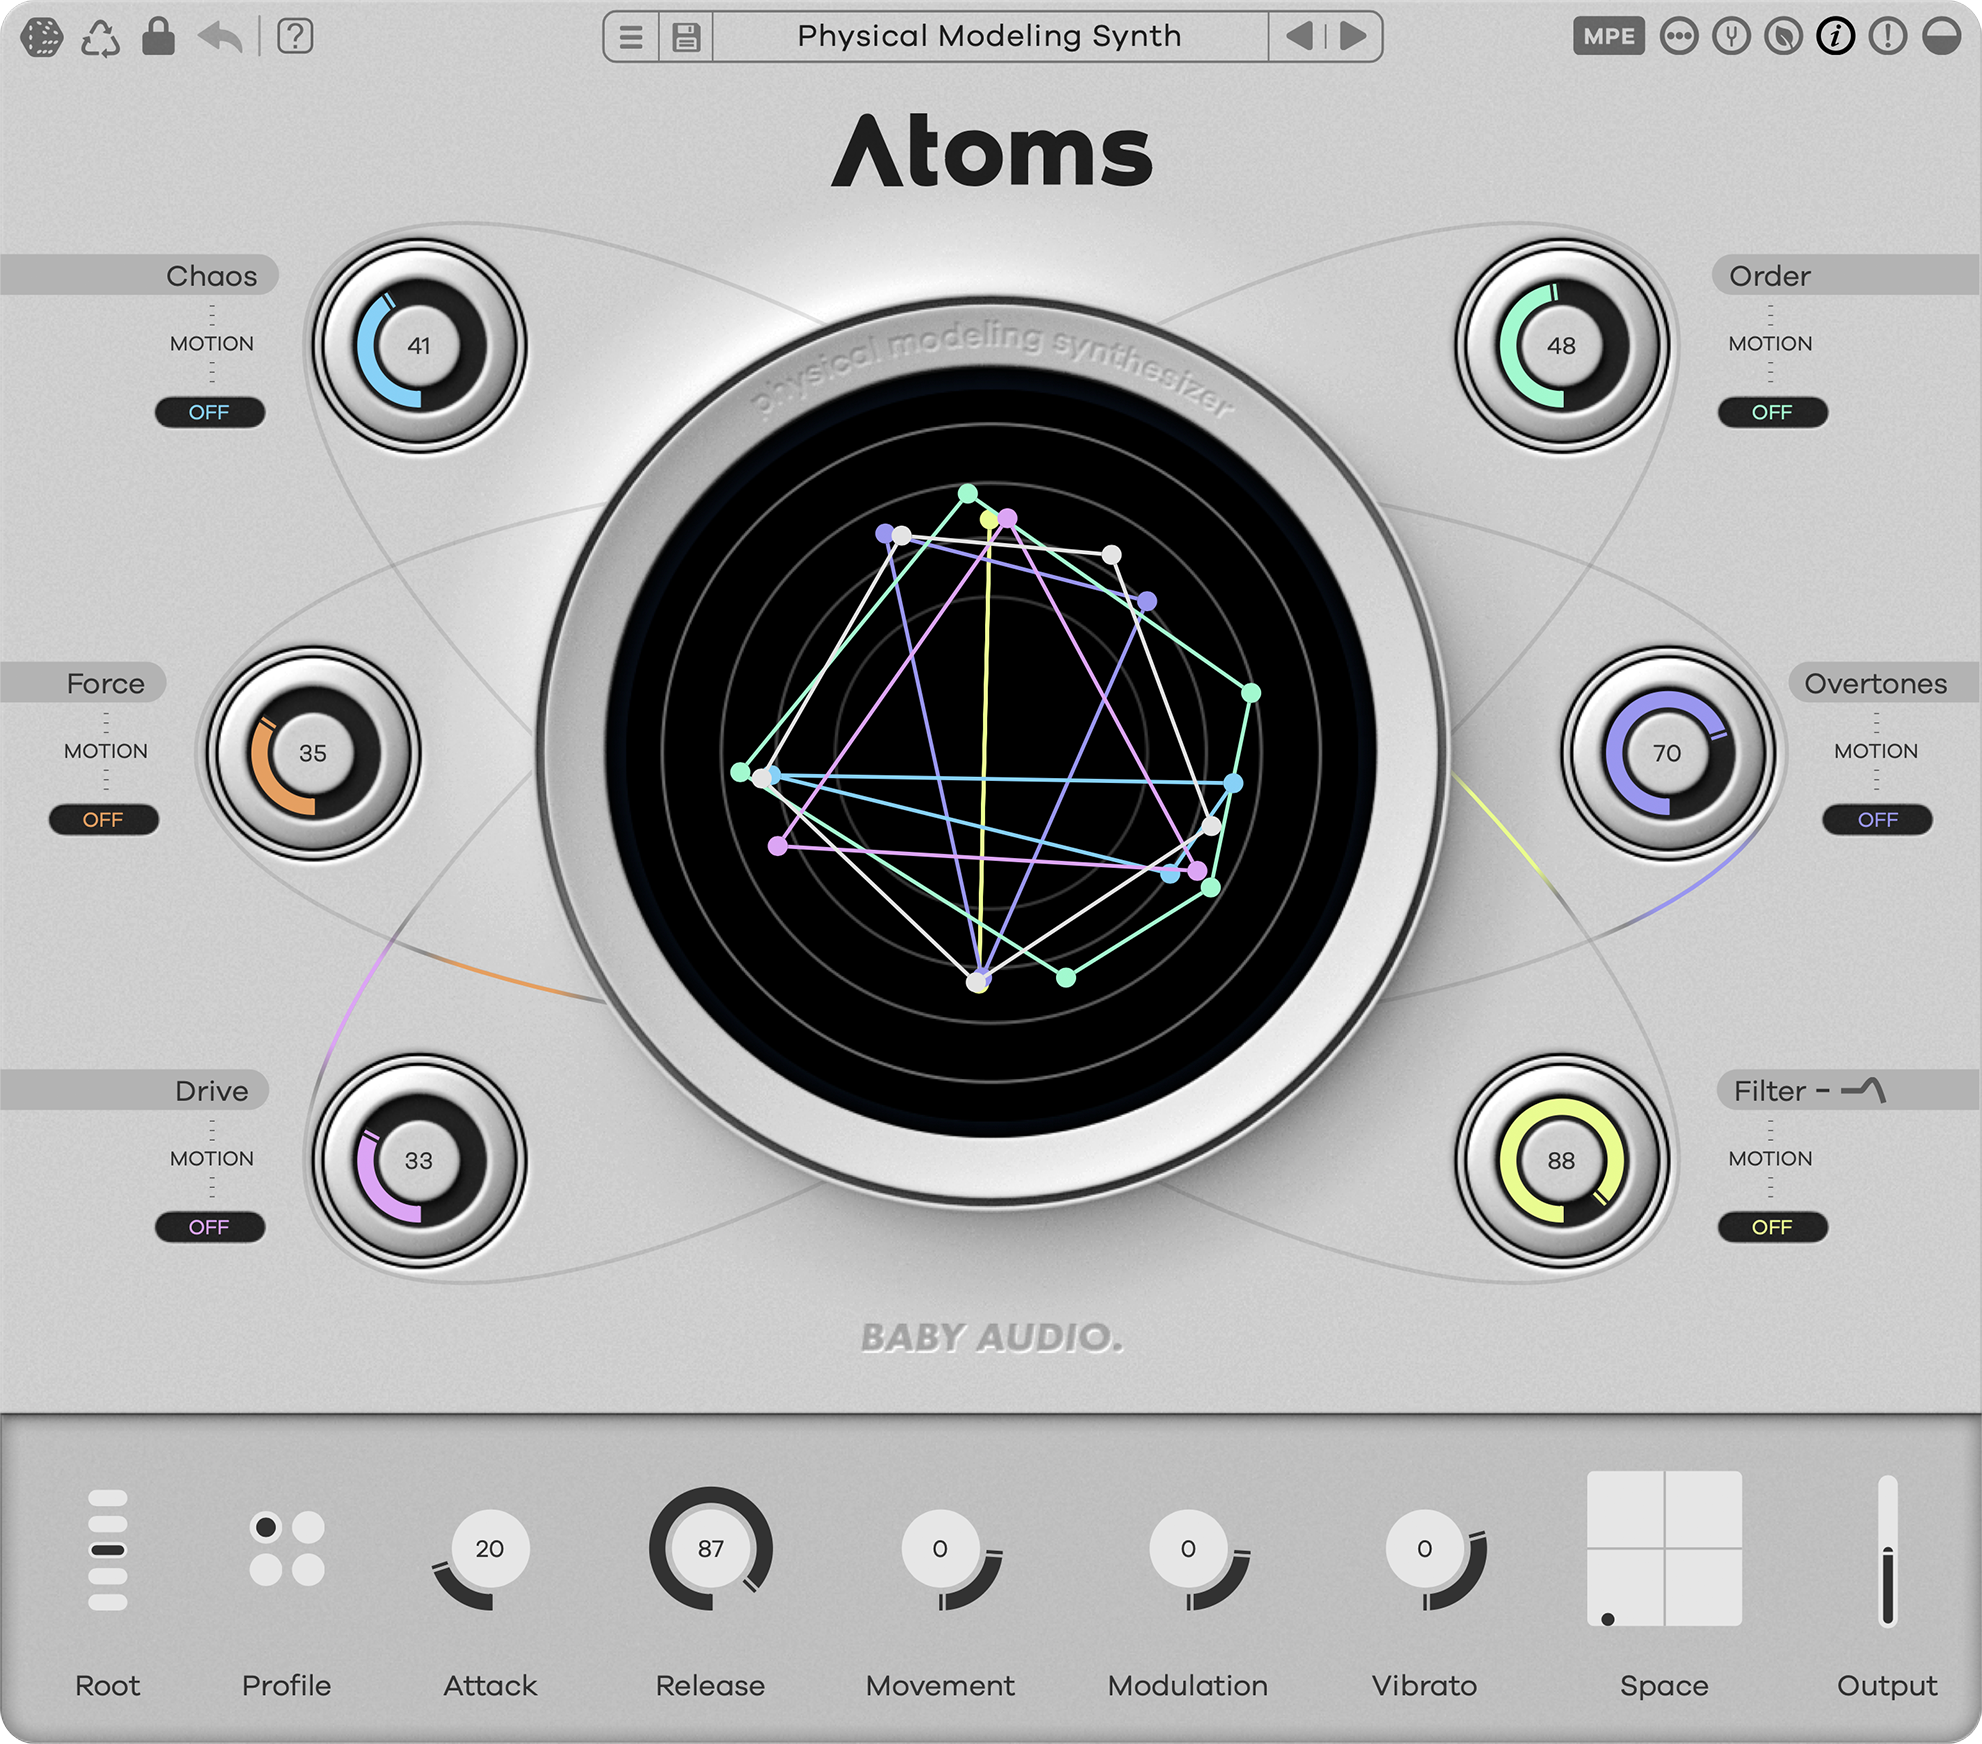 Baby Audio Atoms GUI